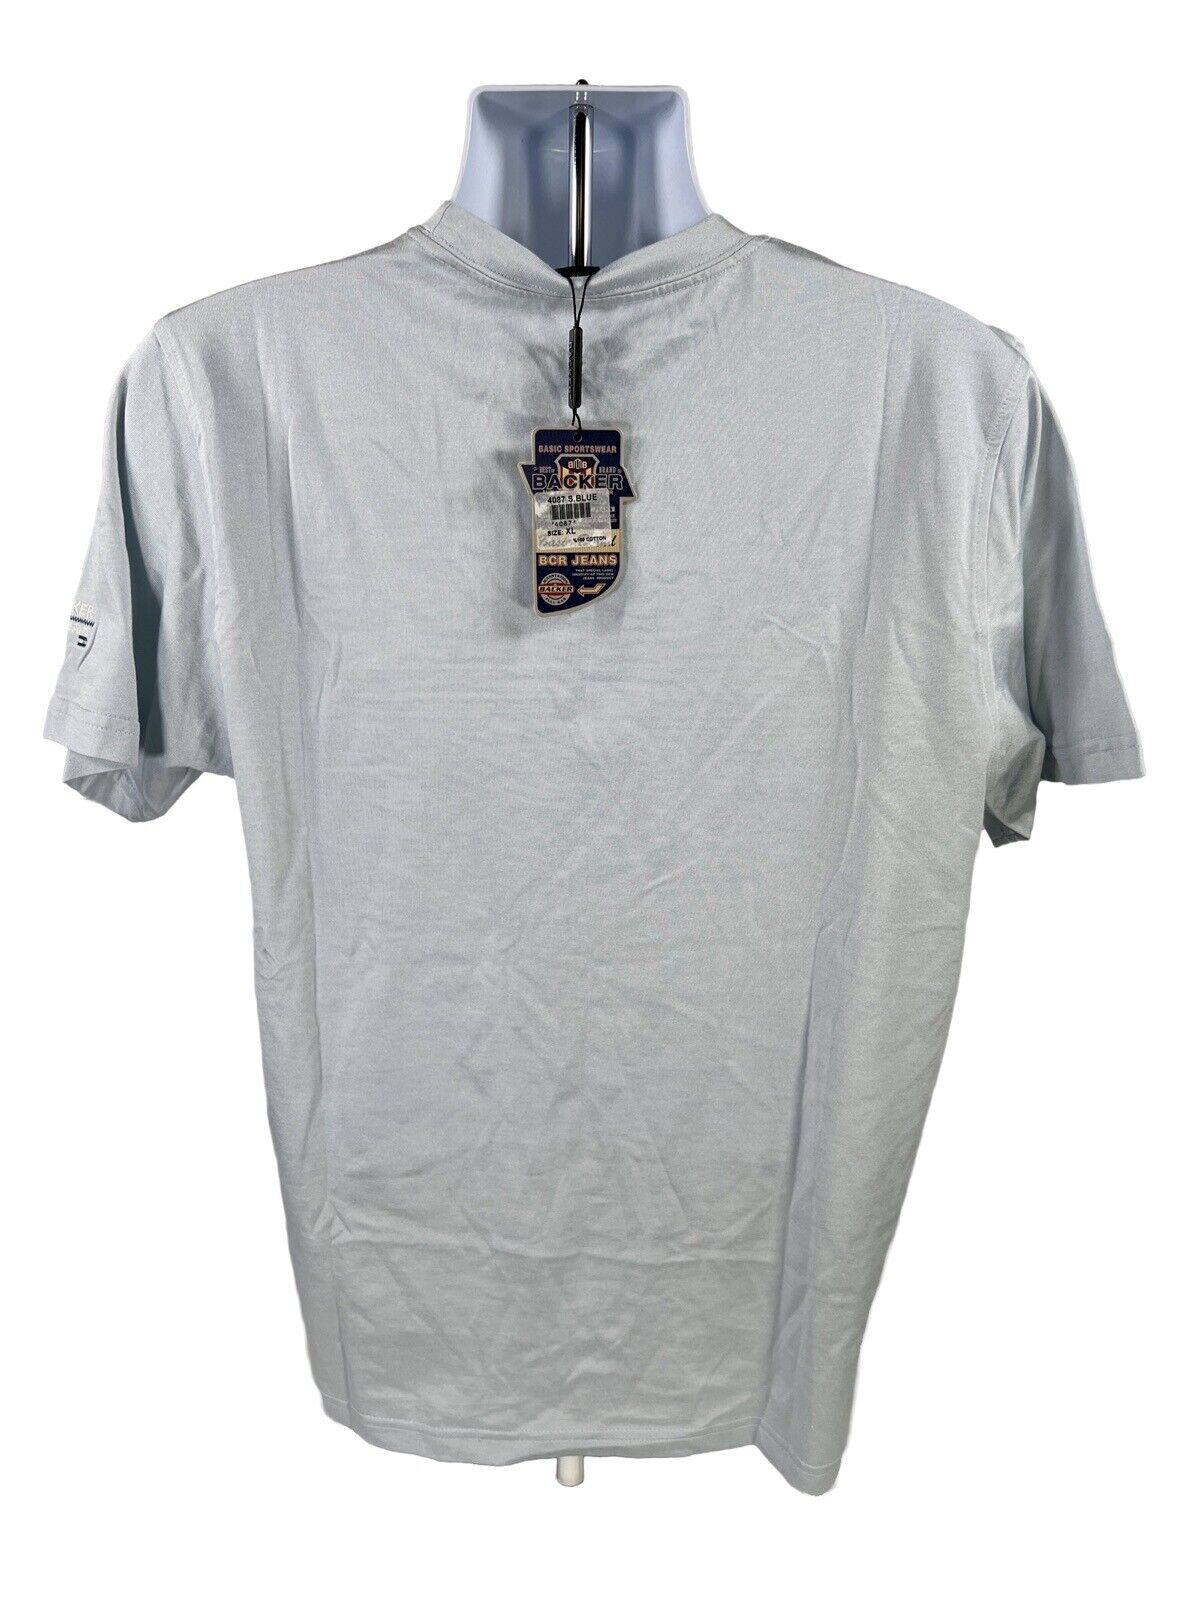 NEW Backer BCR Men's Blue/White Short Sleeve T-Shirt - XL